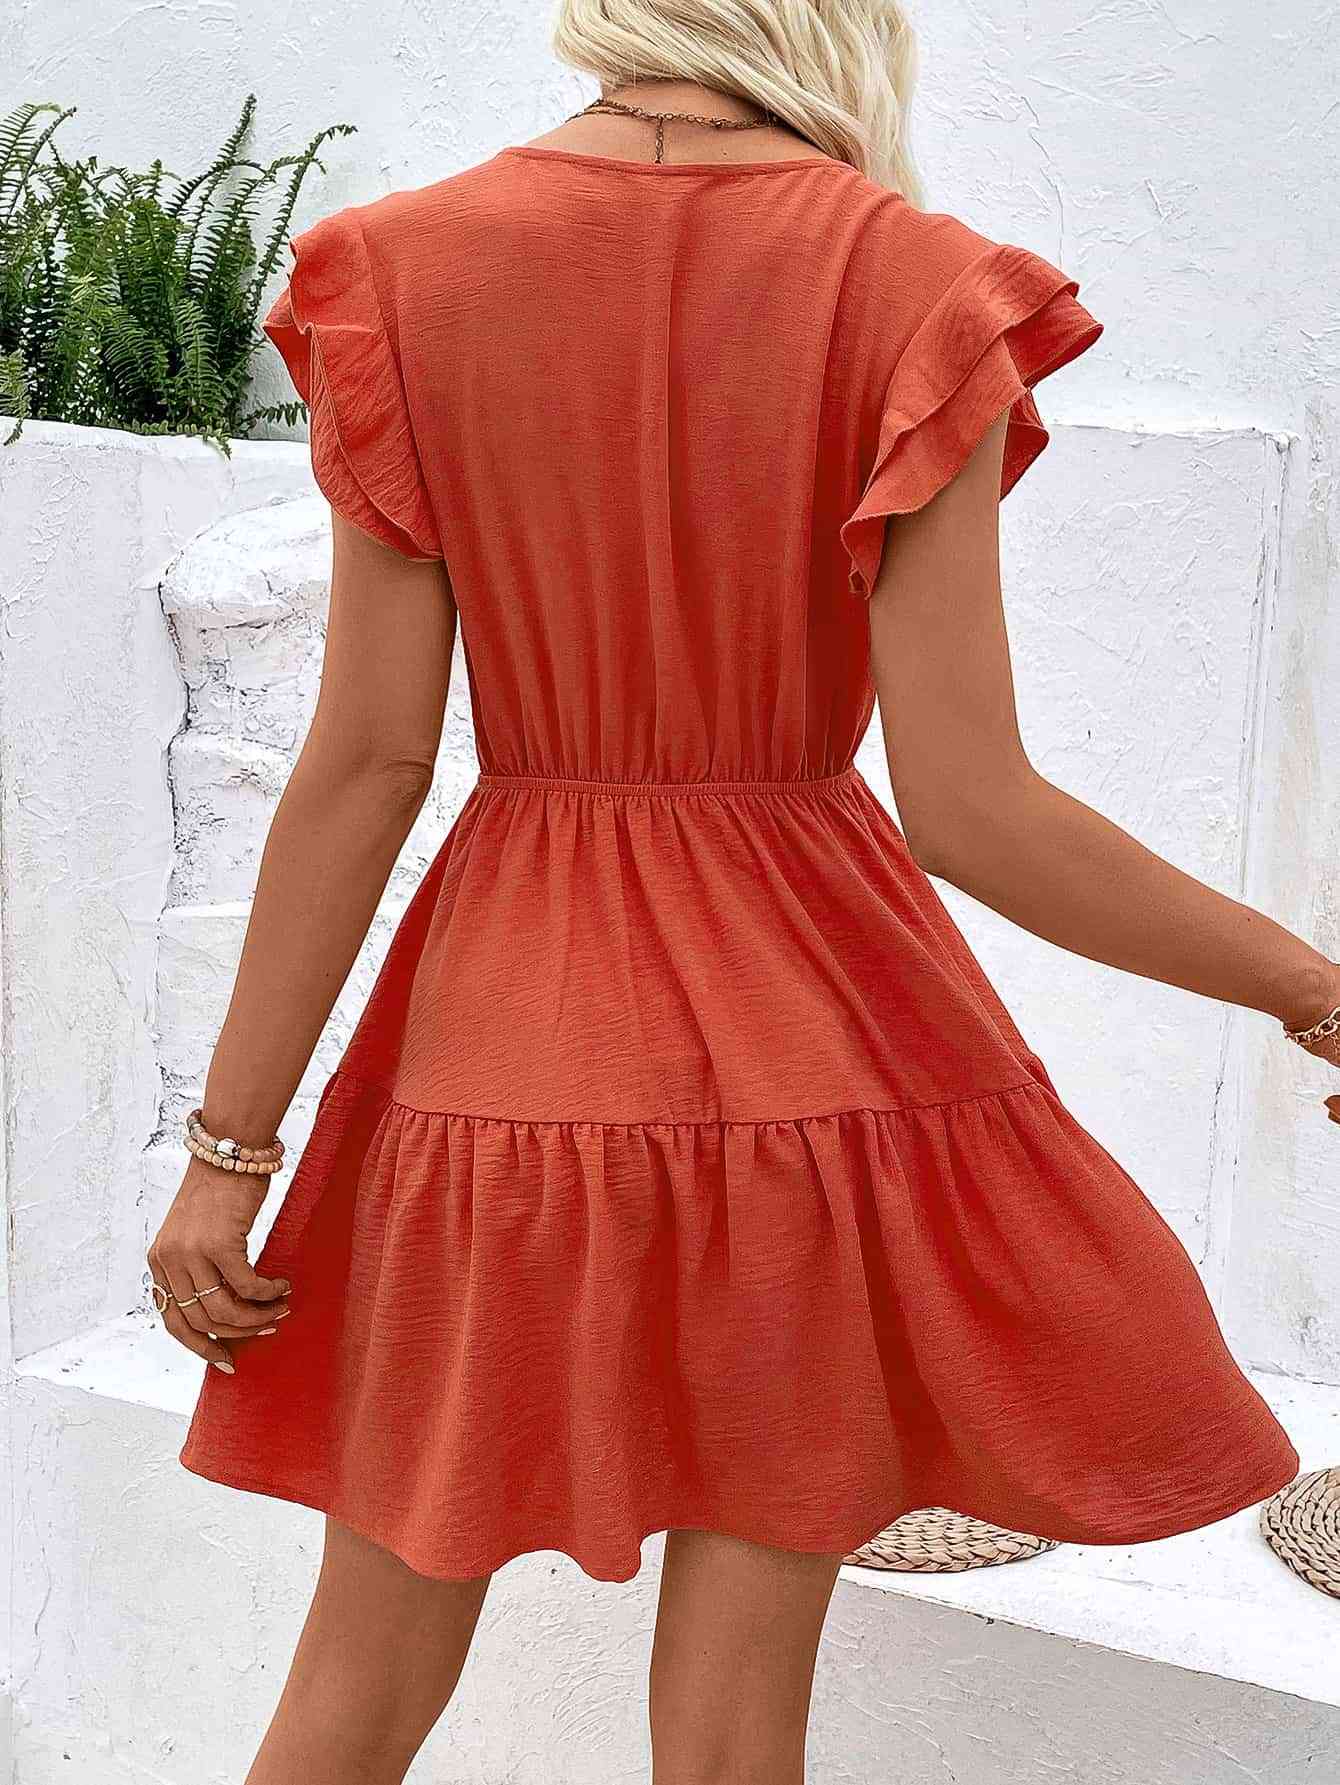 TEEK - Red Orange Tassel Tie V-Neck Dress DRESS TEEK Trend   